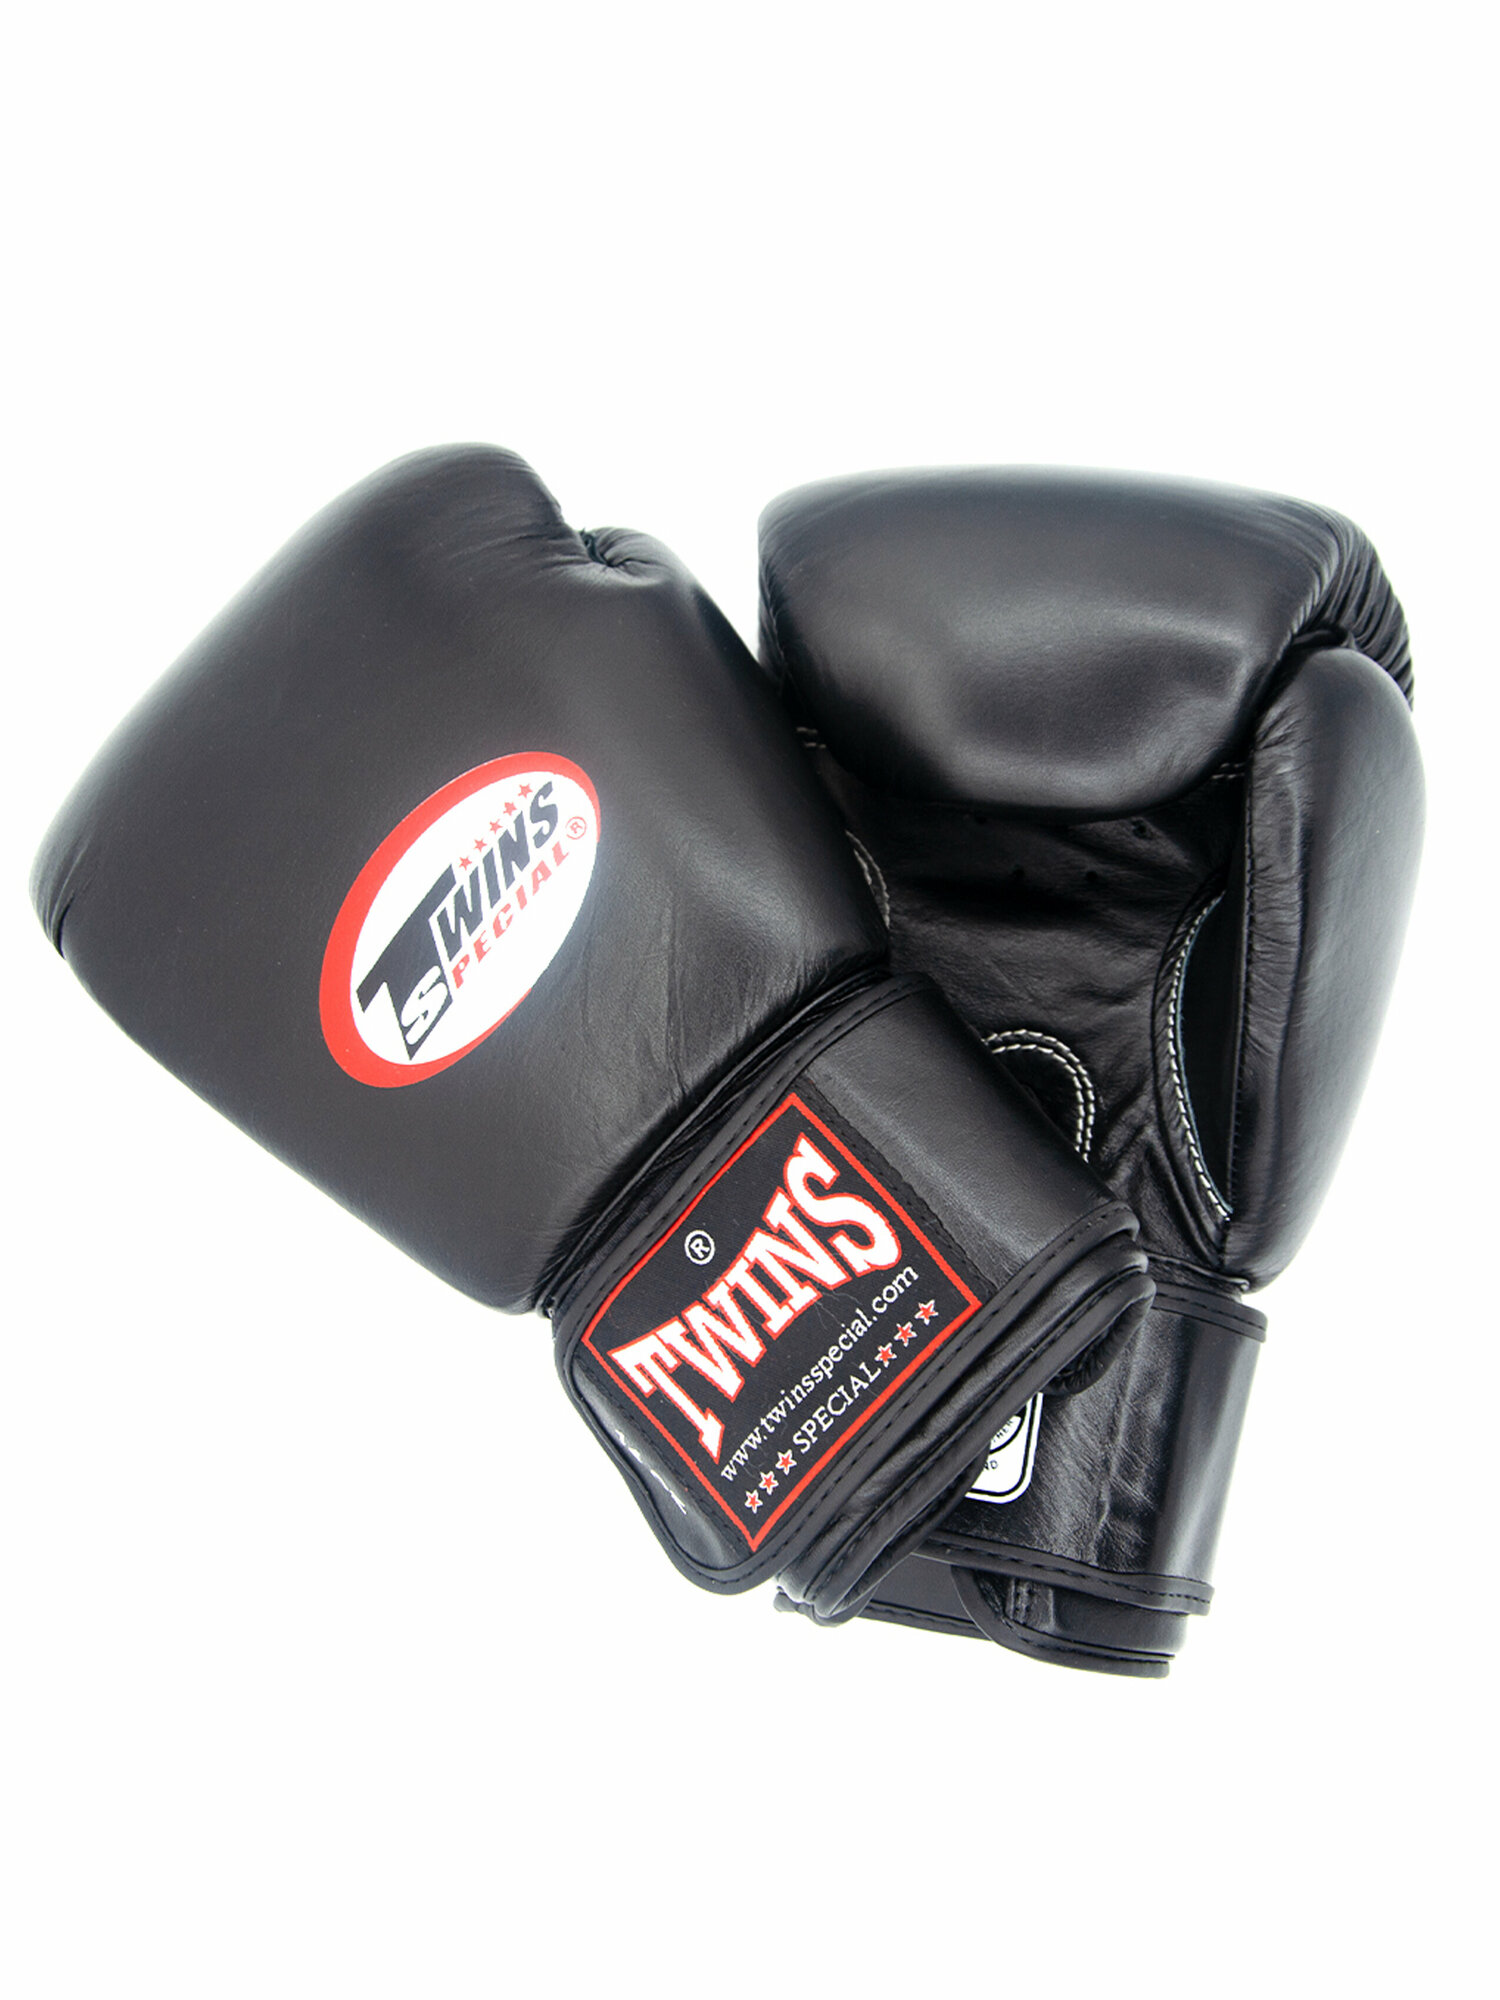 Боксерские перчатки Twins Special BGVL-3, black-16oz